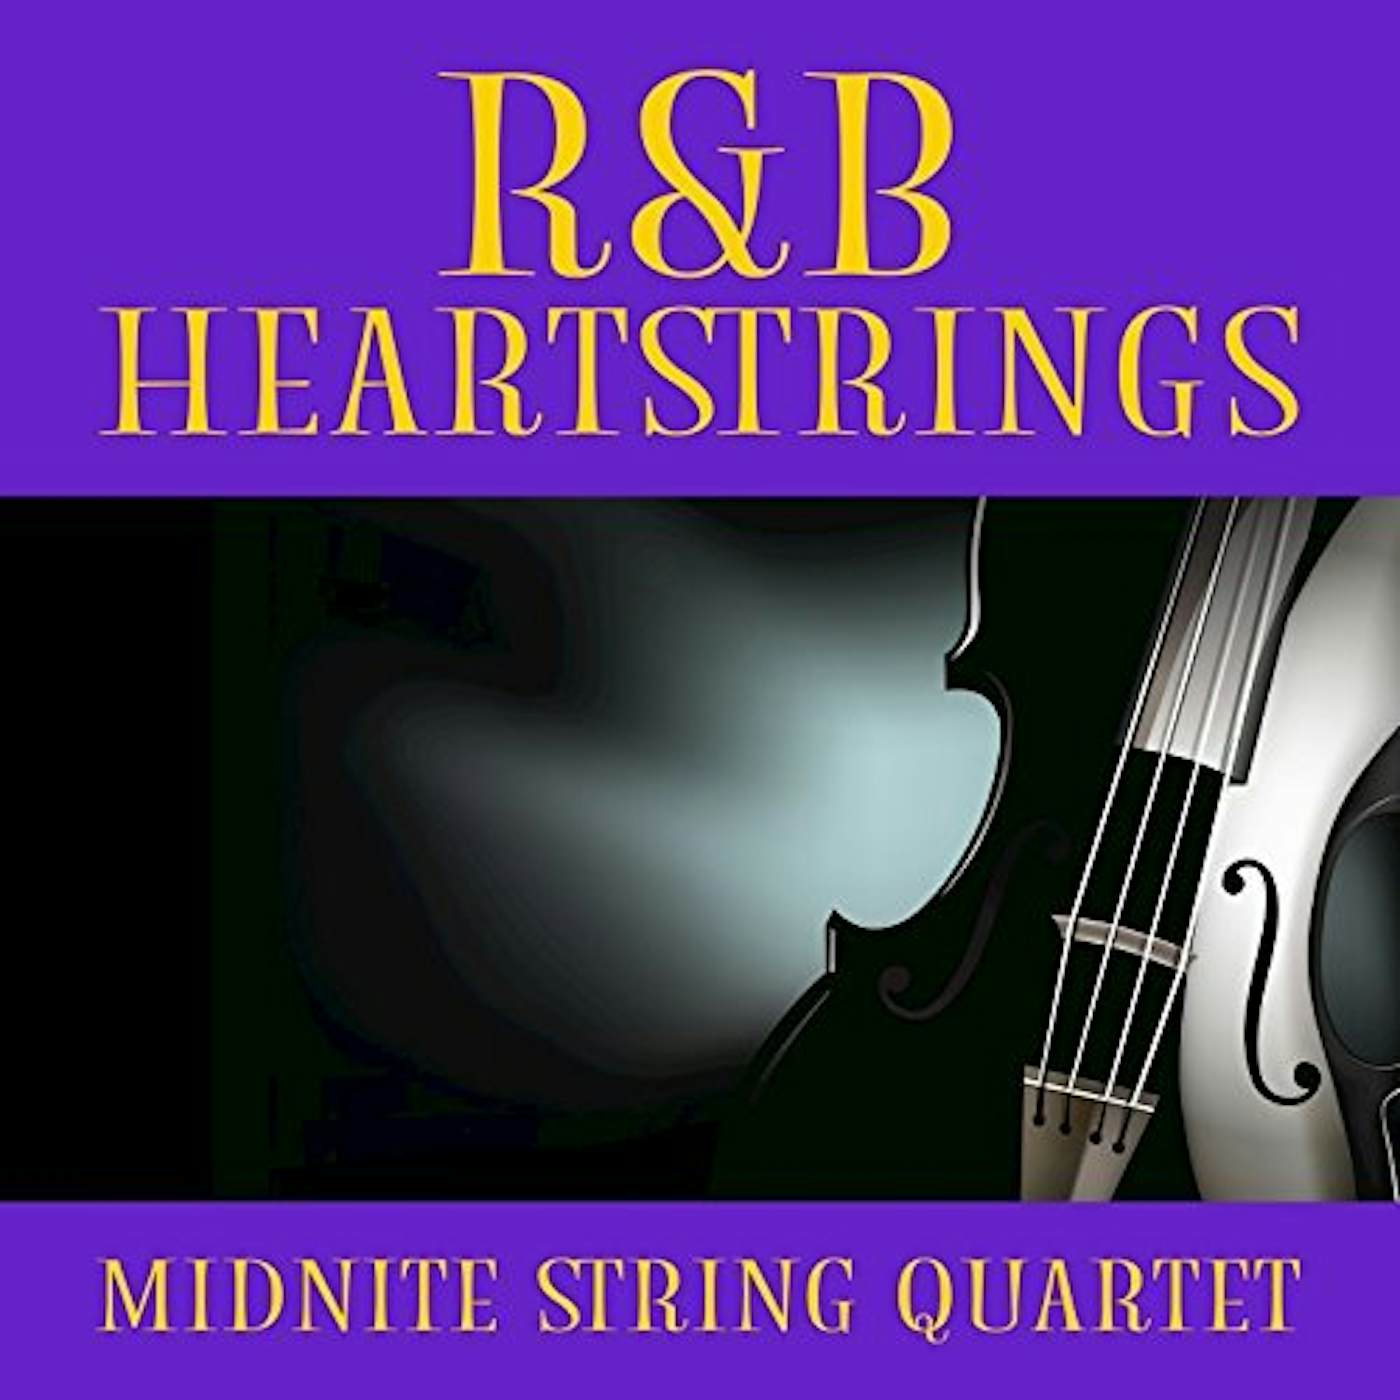 Midnite String Quartet R&B HEARTSTRINGS (MOD) CD